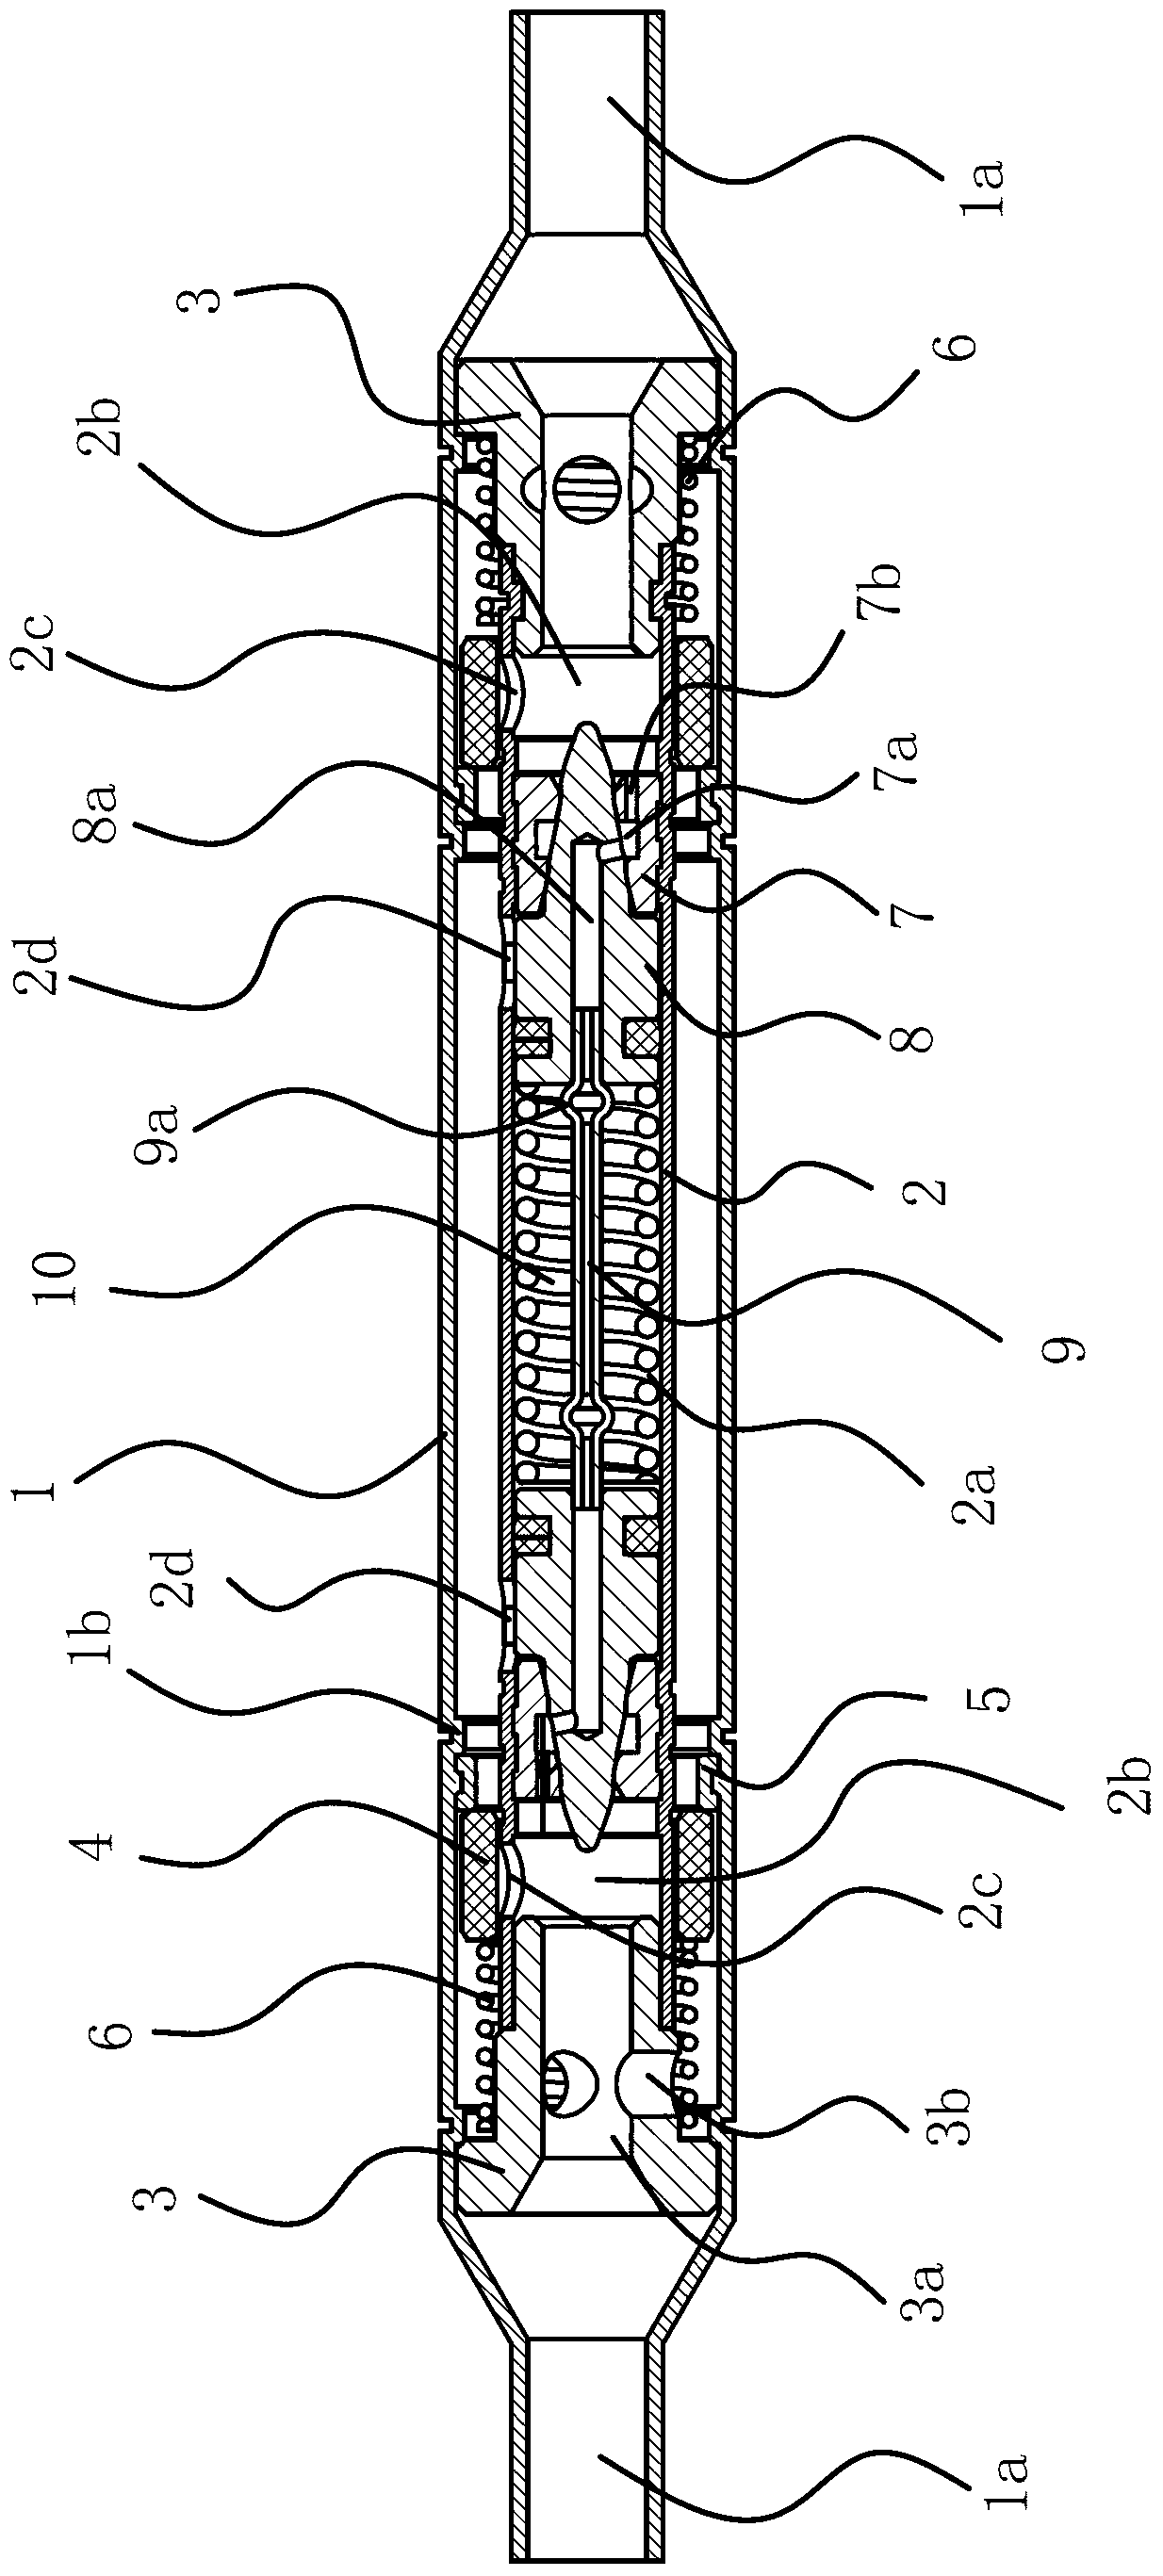 Bi-direction circulation expansion valve